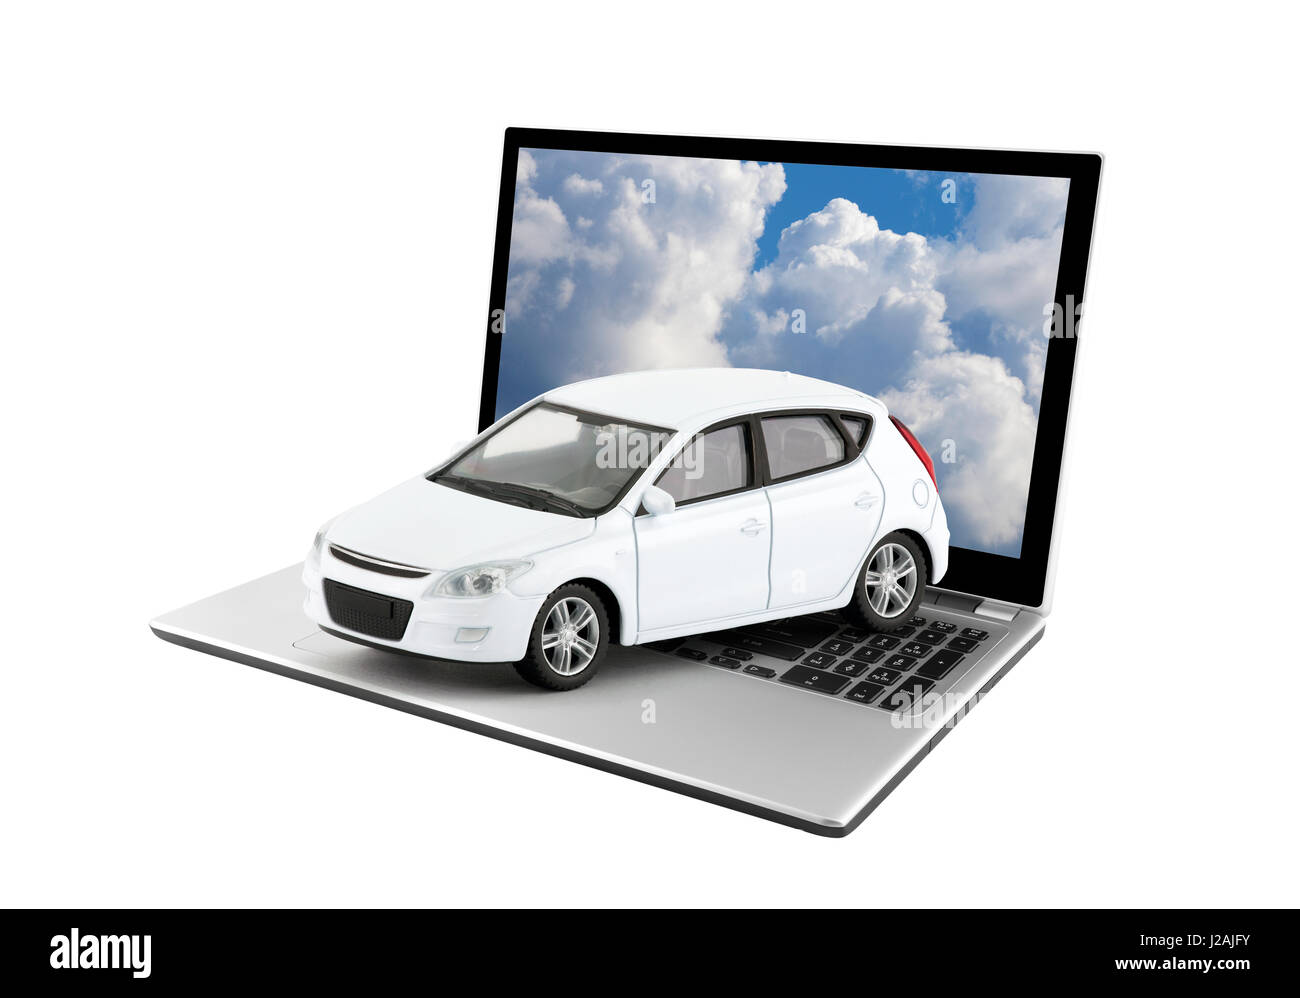 White toy car on laptop isolated on white background Stock Photo